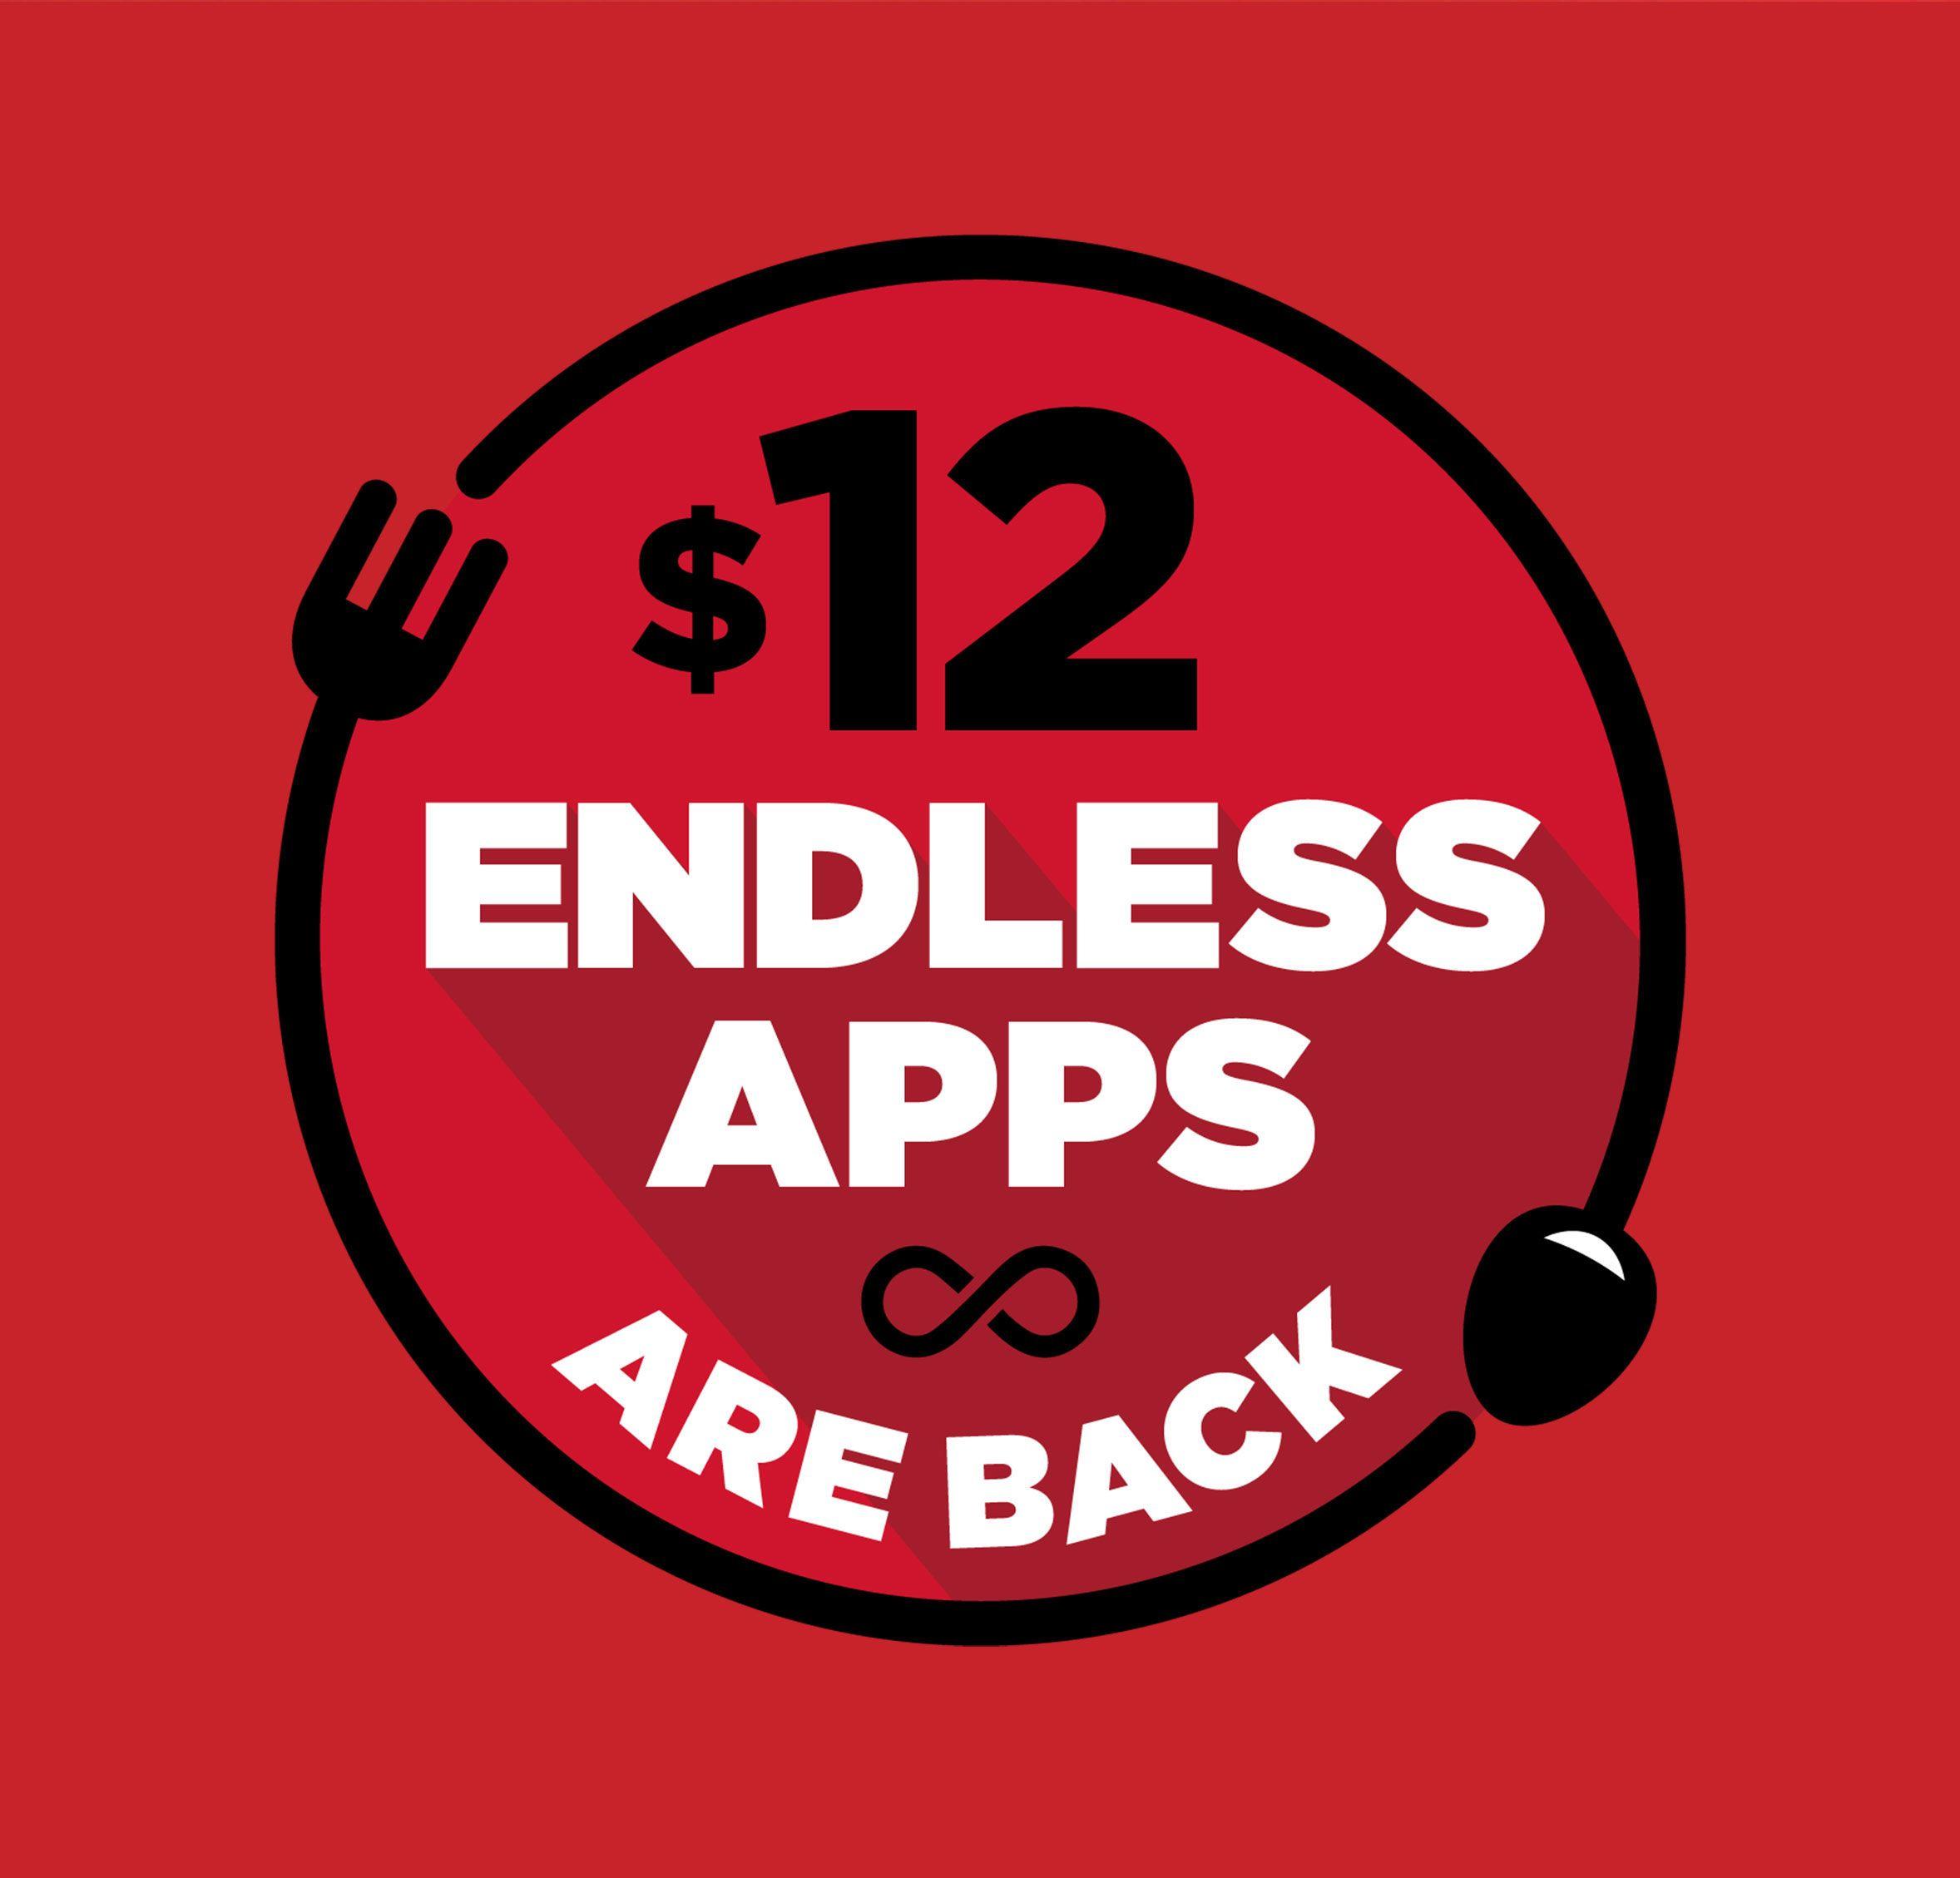 Tgifriday's Logo - Endless Apps - Endless Appetizers | TGI Fridays